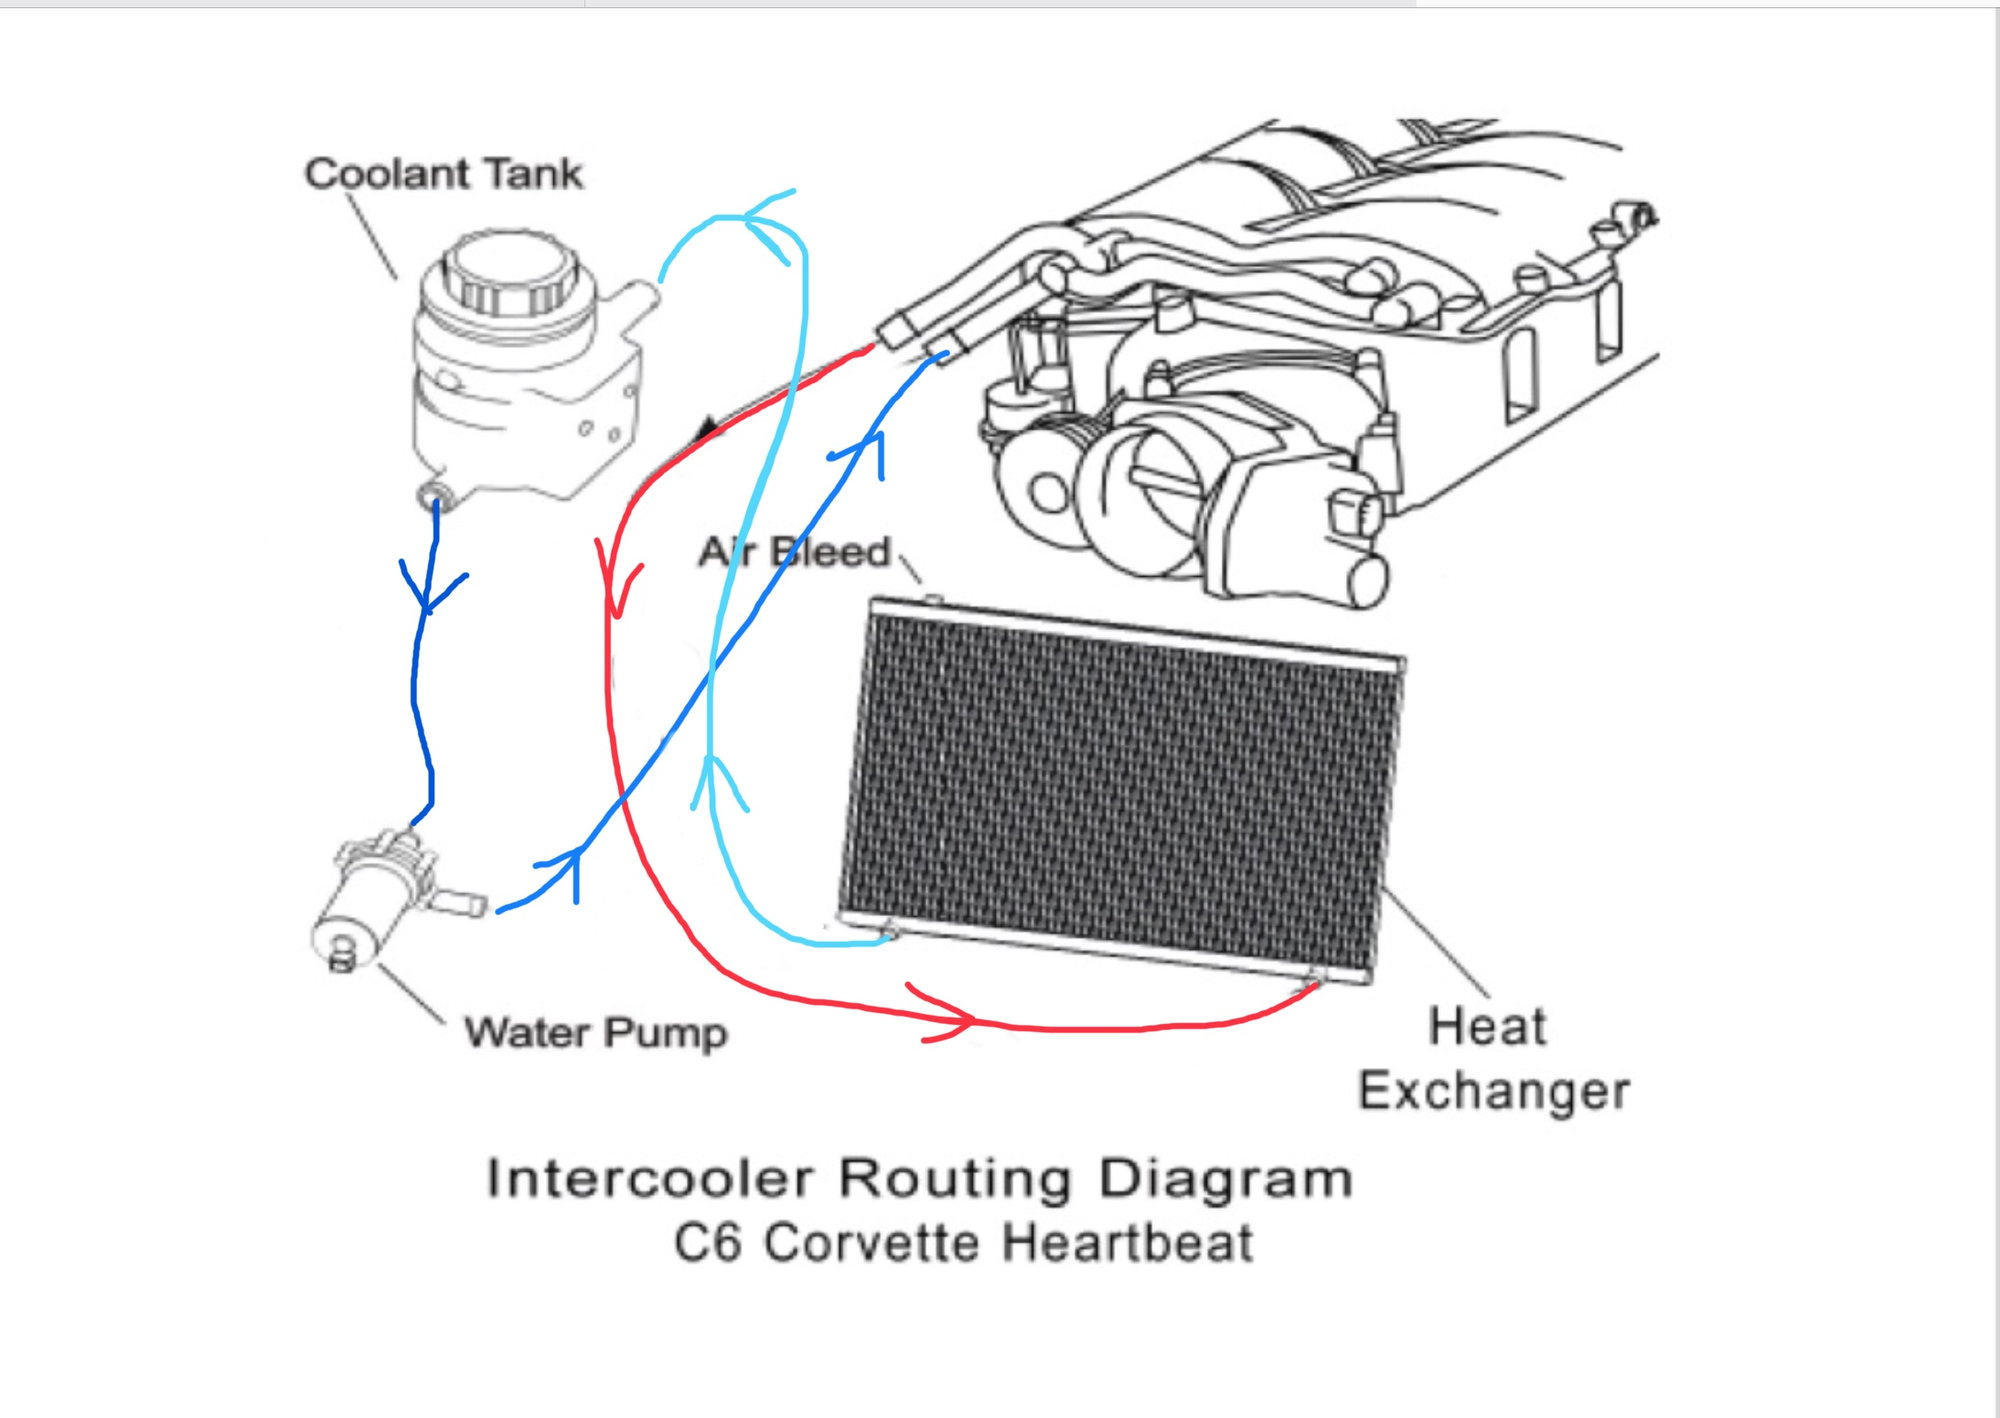 Intercooler flow direction with Ice? - CorvetteForum - Chevrolet ...